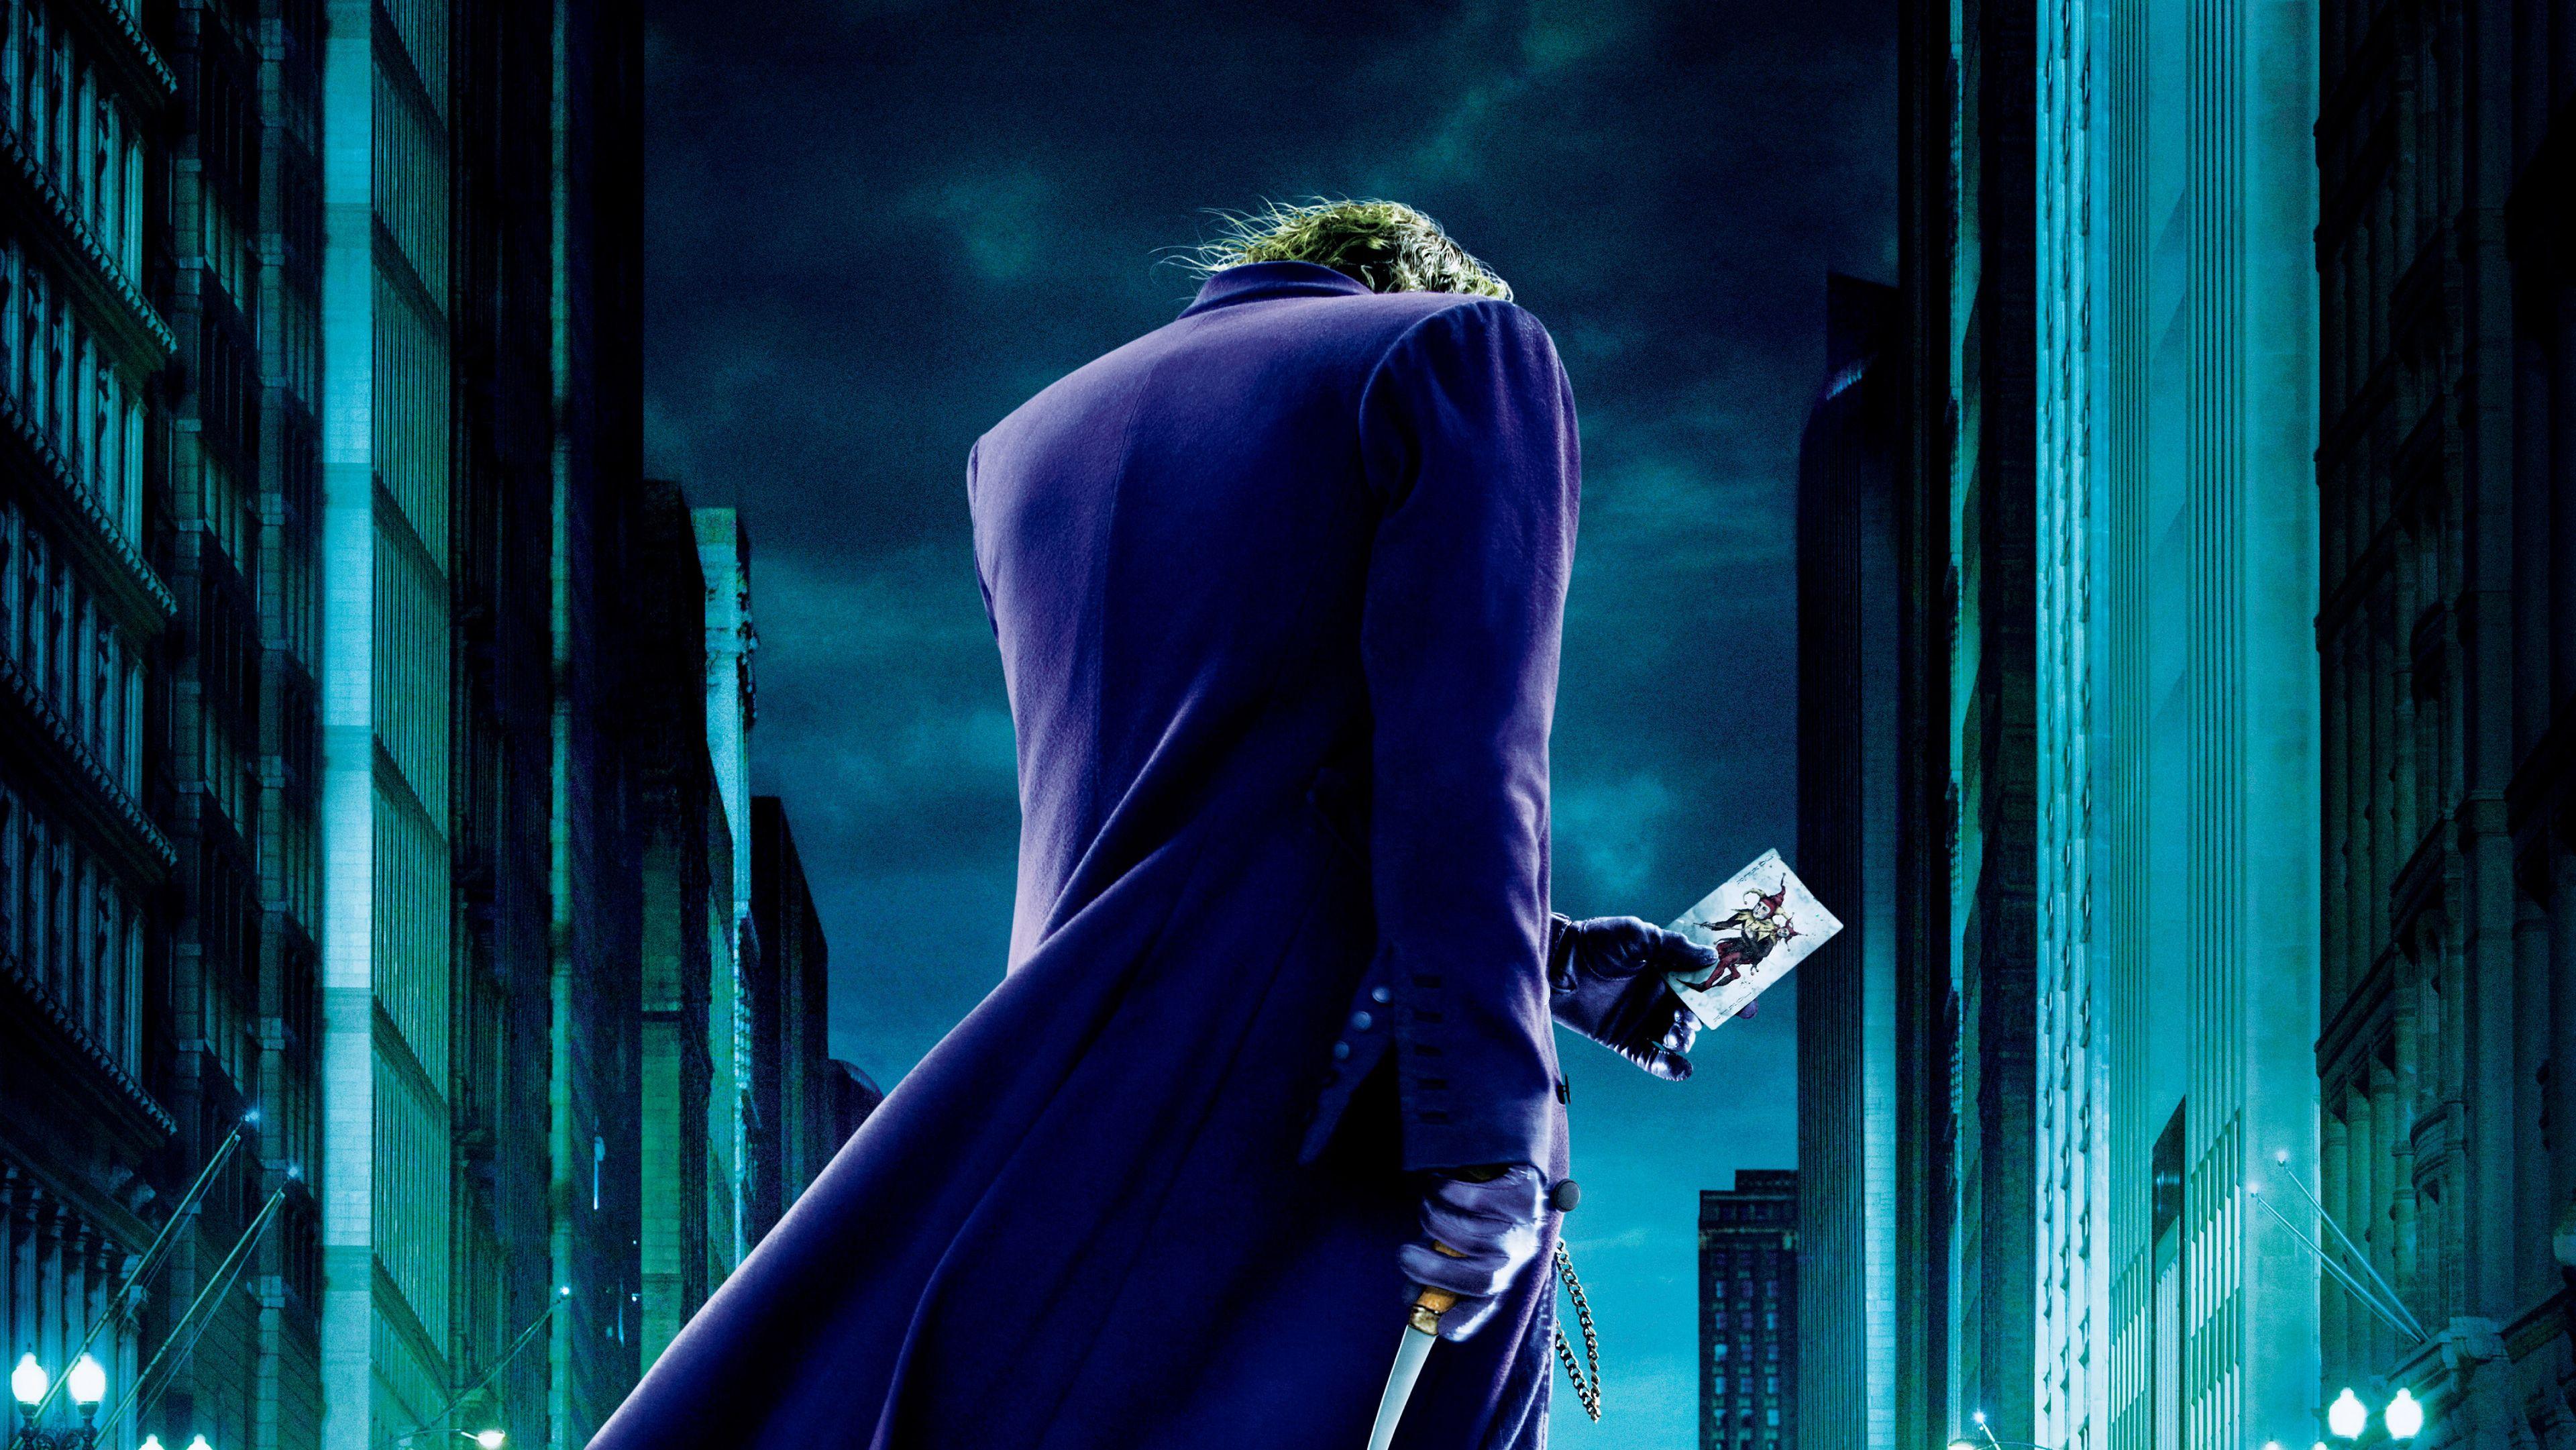 Dark Knight Joker In 4k Ultra Hd Wallpapers Top Free Dark Knight Images, Photos, Reviews